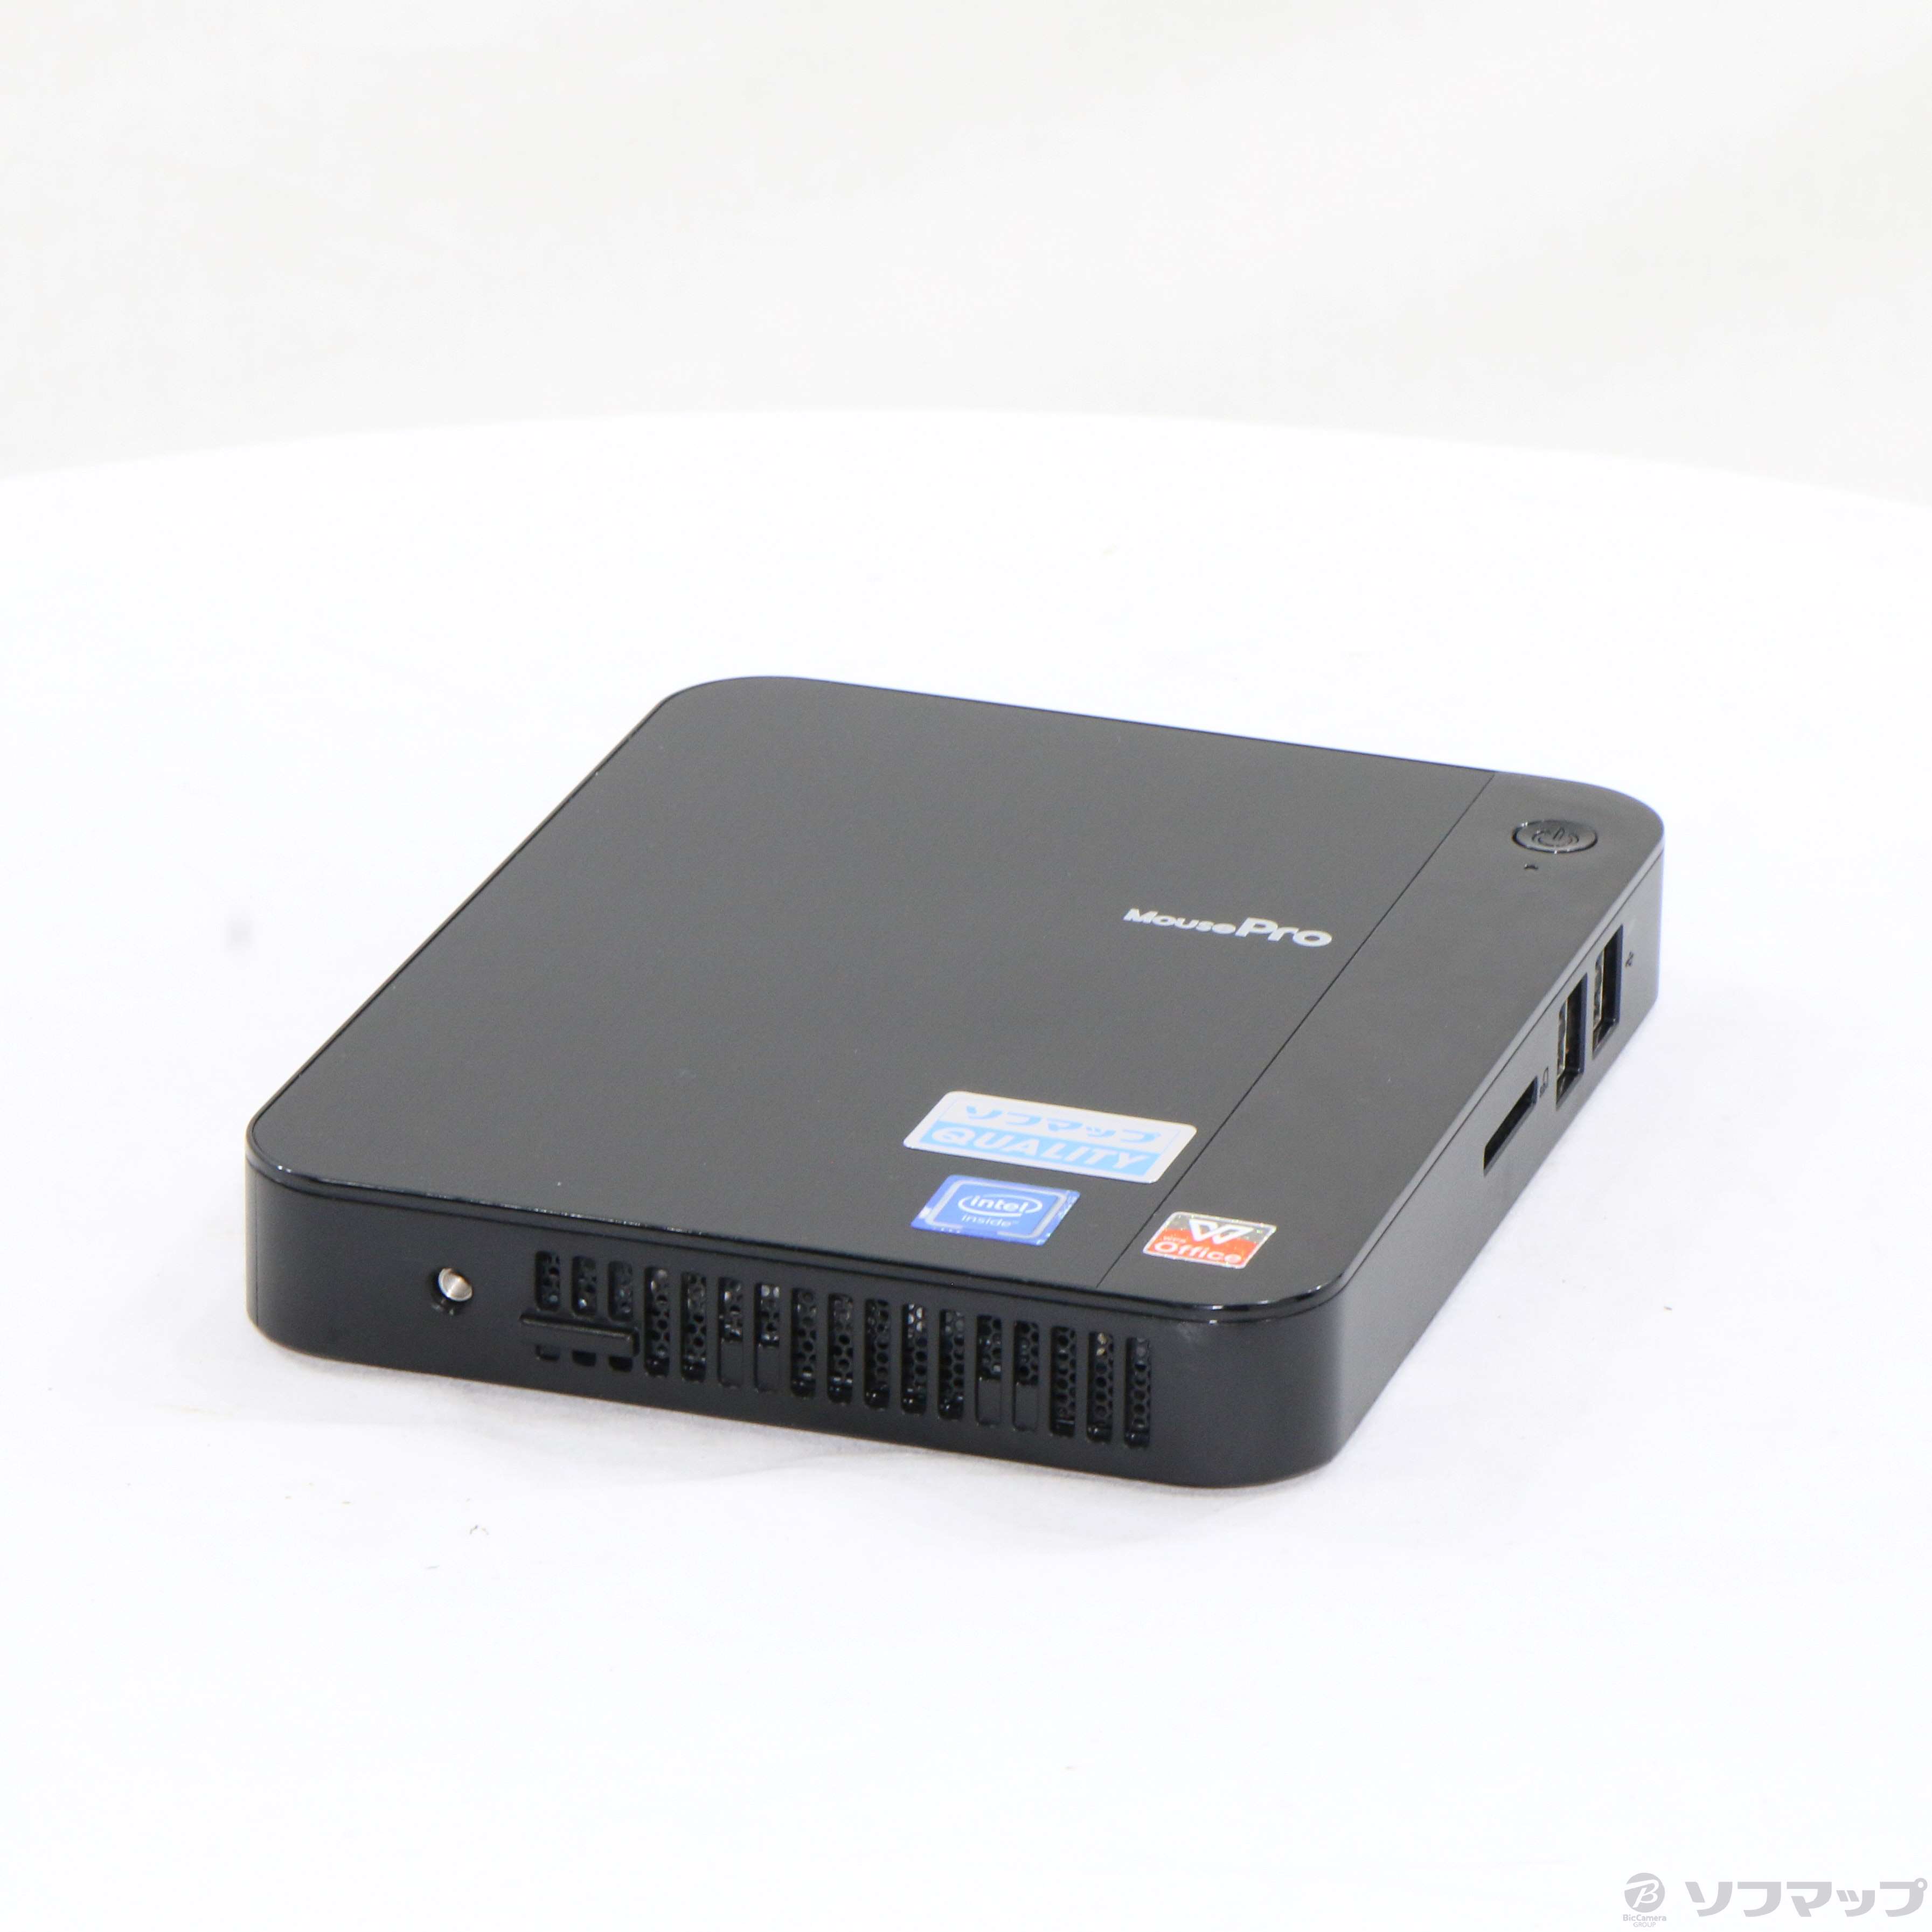 16GBMouse MPro-T301 Intel Celeron G4930 nvme - Windowsデスクトップ